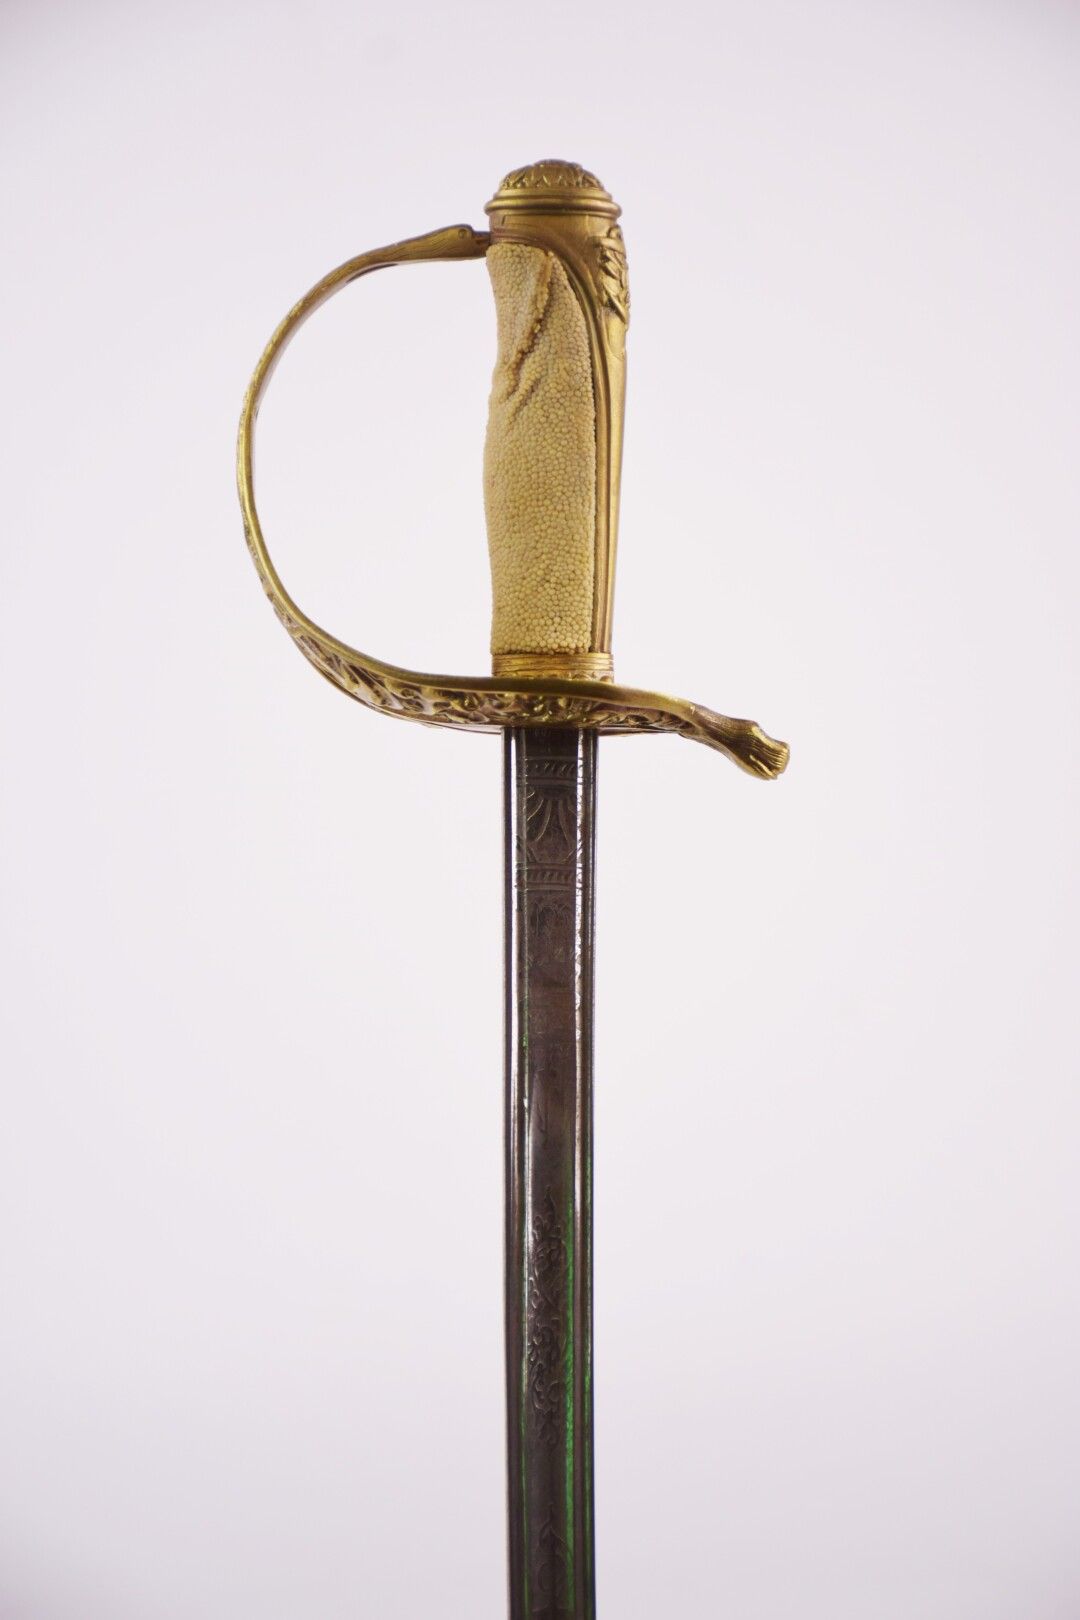 Null 镂空黄铜刀柄，装饰有海洋墨水，燧石刀鞘（据报道），雕刻的弧形刀刃

19世纪时期

刀片的长度：68厘米